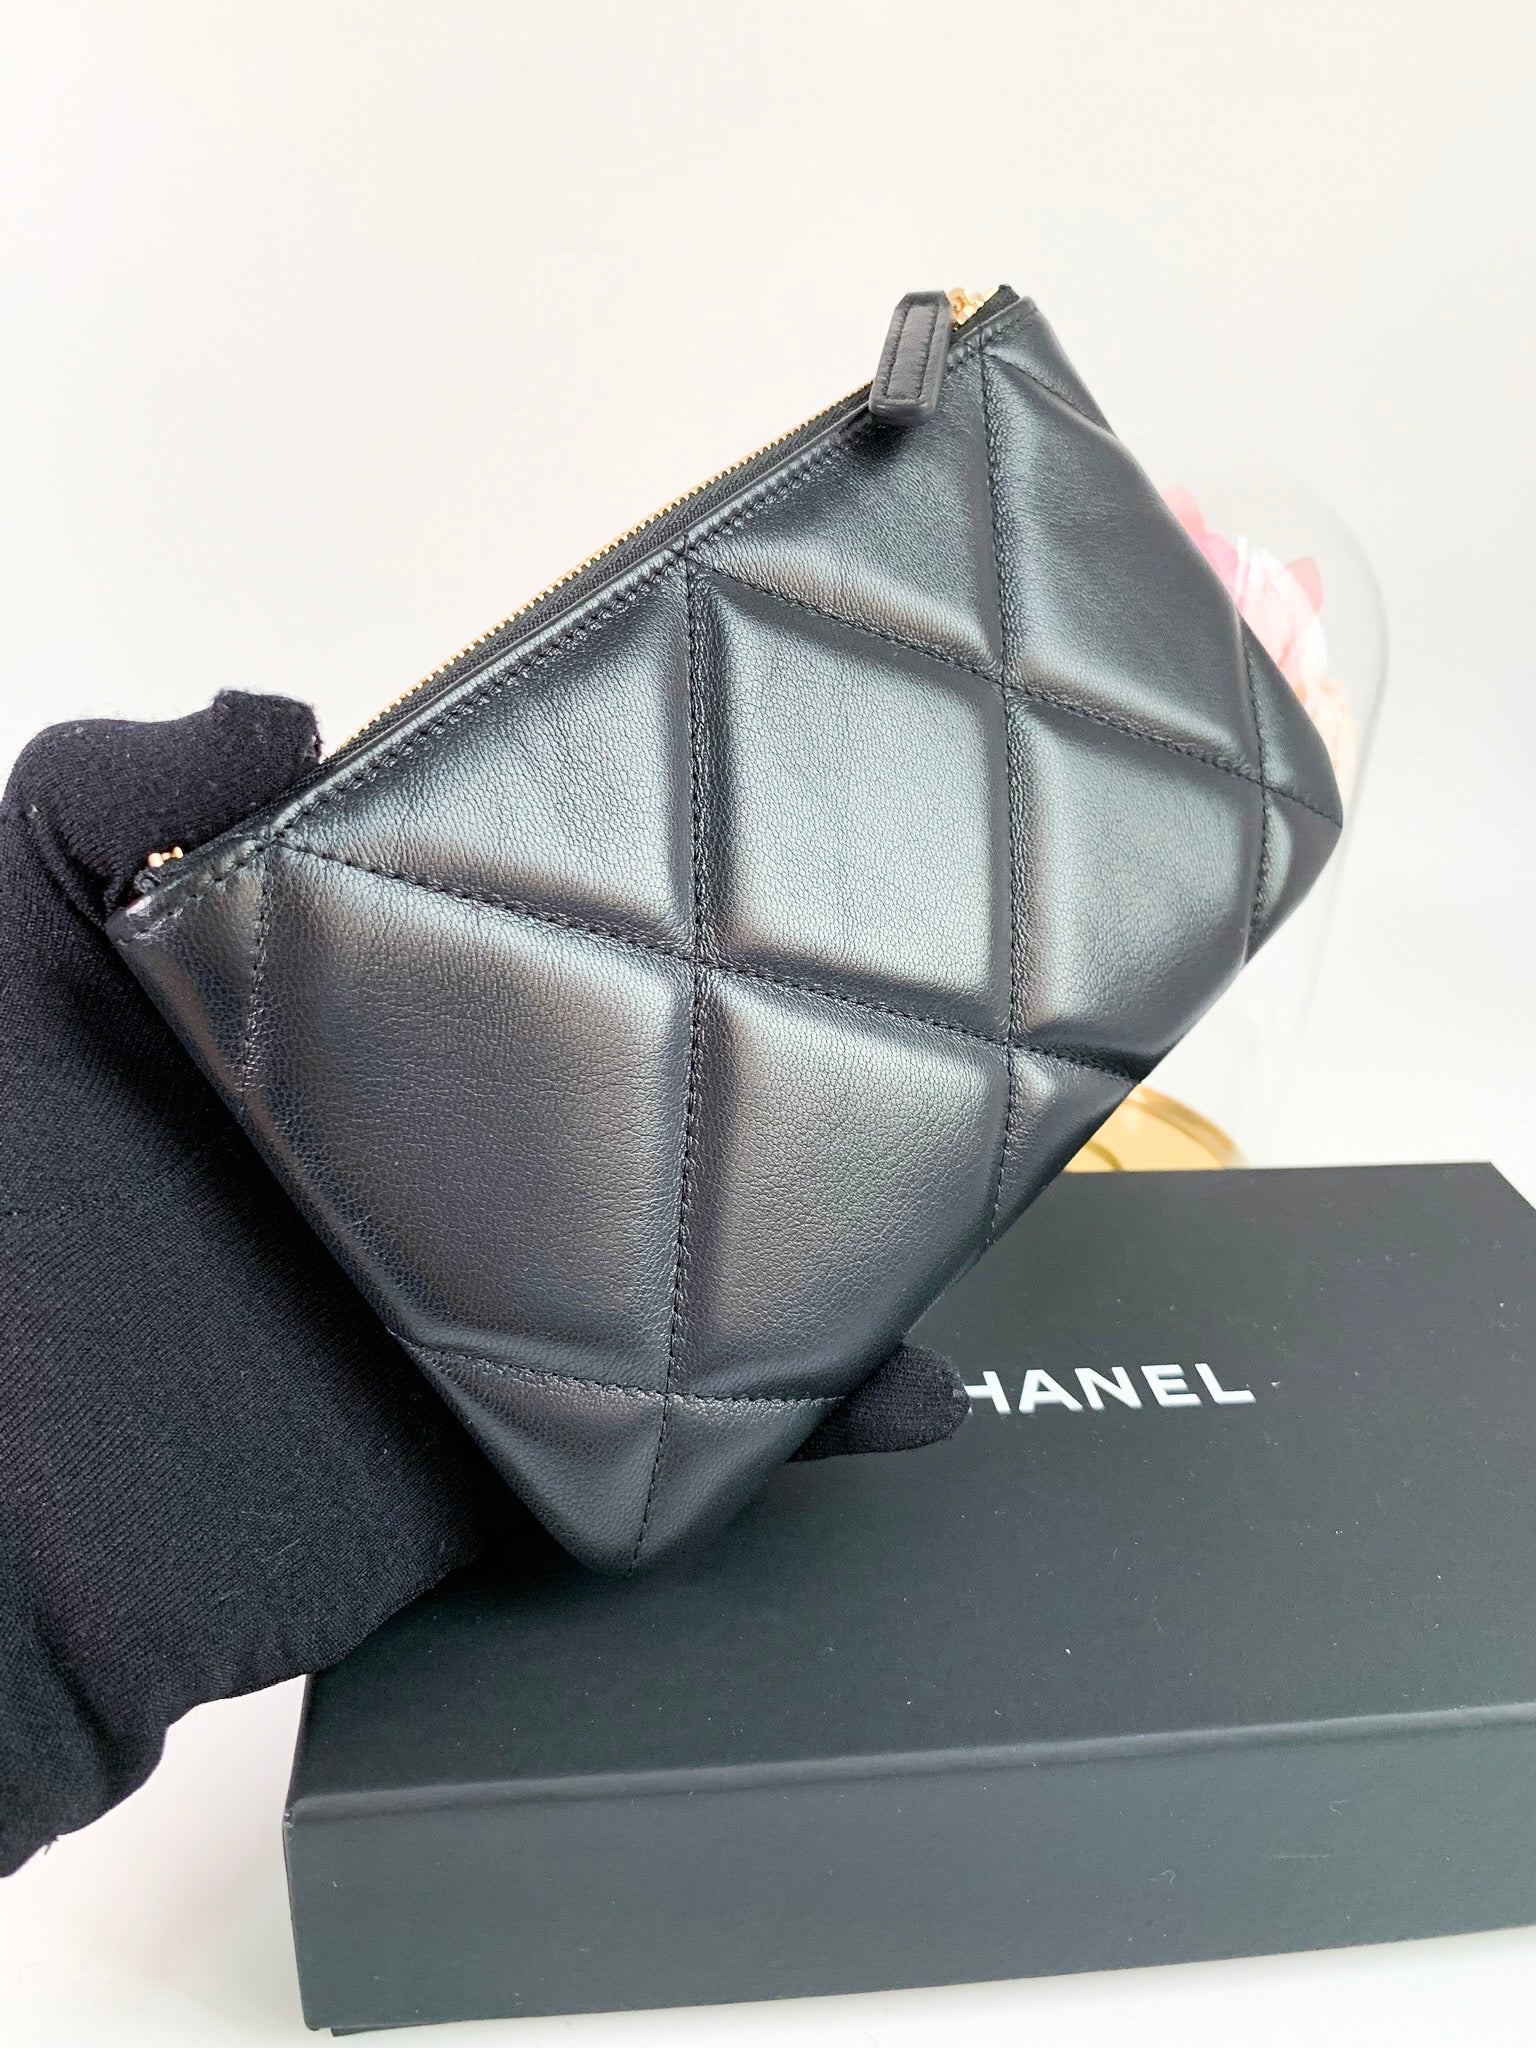 Chanel 19 Wristlet Pouch Black Lambskin Preowned in Box  Julia Rose  Boston  Shop